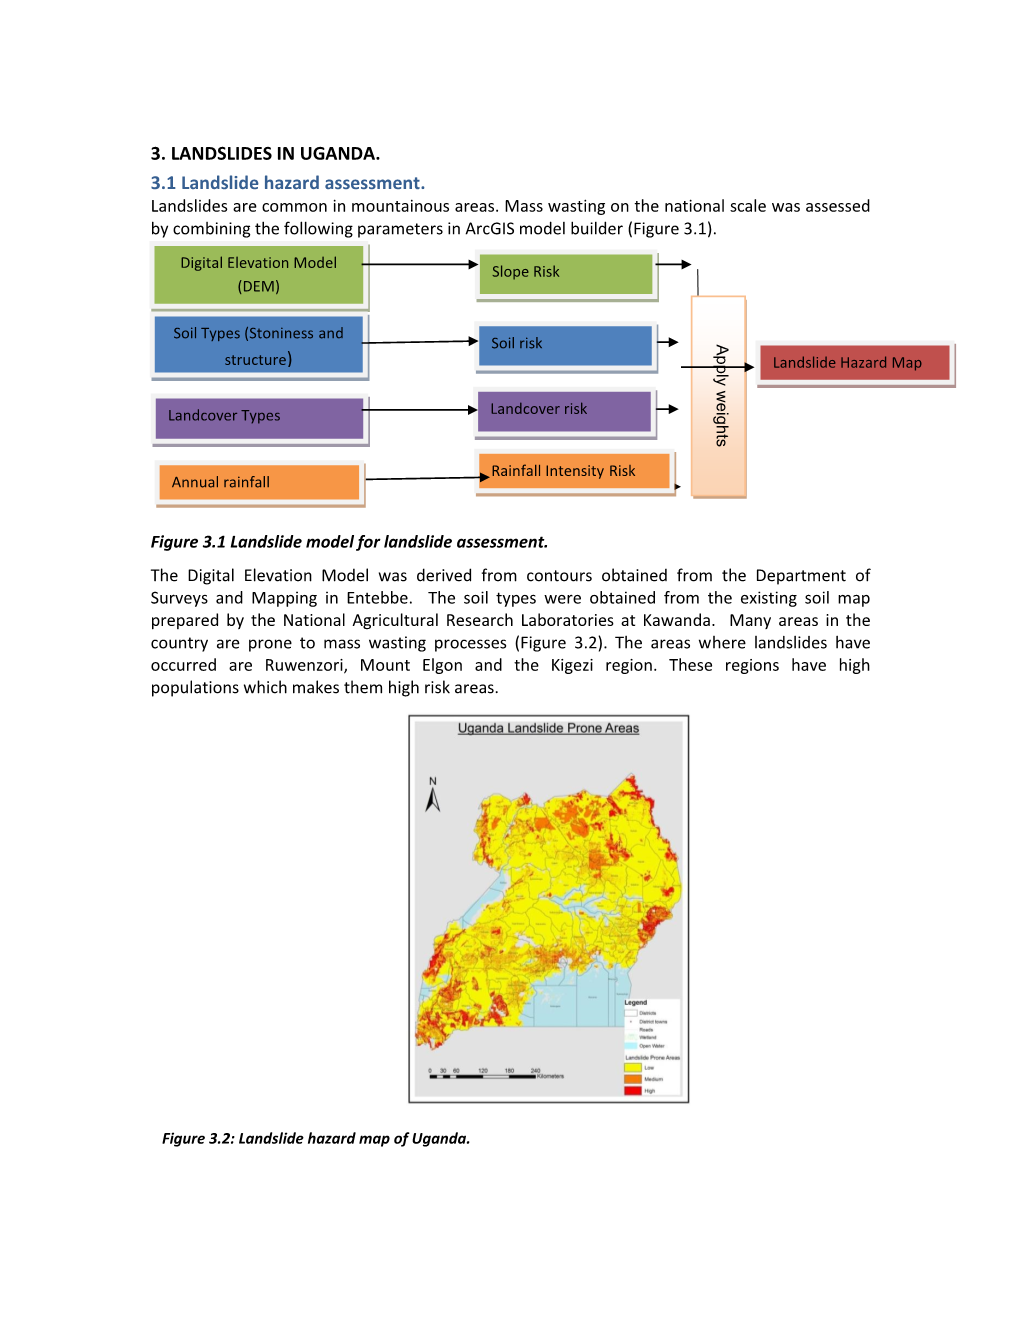 3. LANDSLIDES in UGANDA. 3.1 Landslide Hazard Assessment. Landslides Are Common in Mountainous Areas